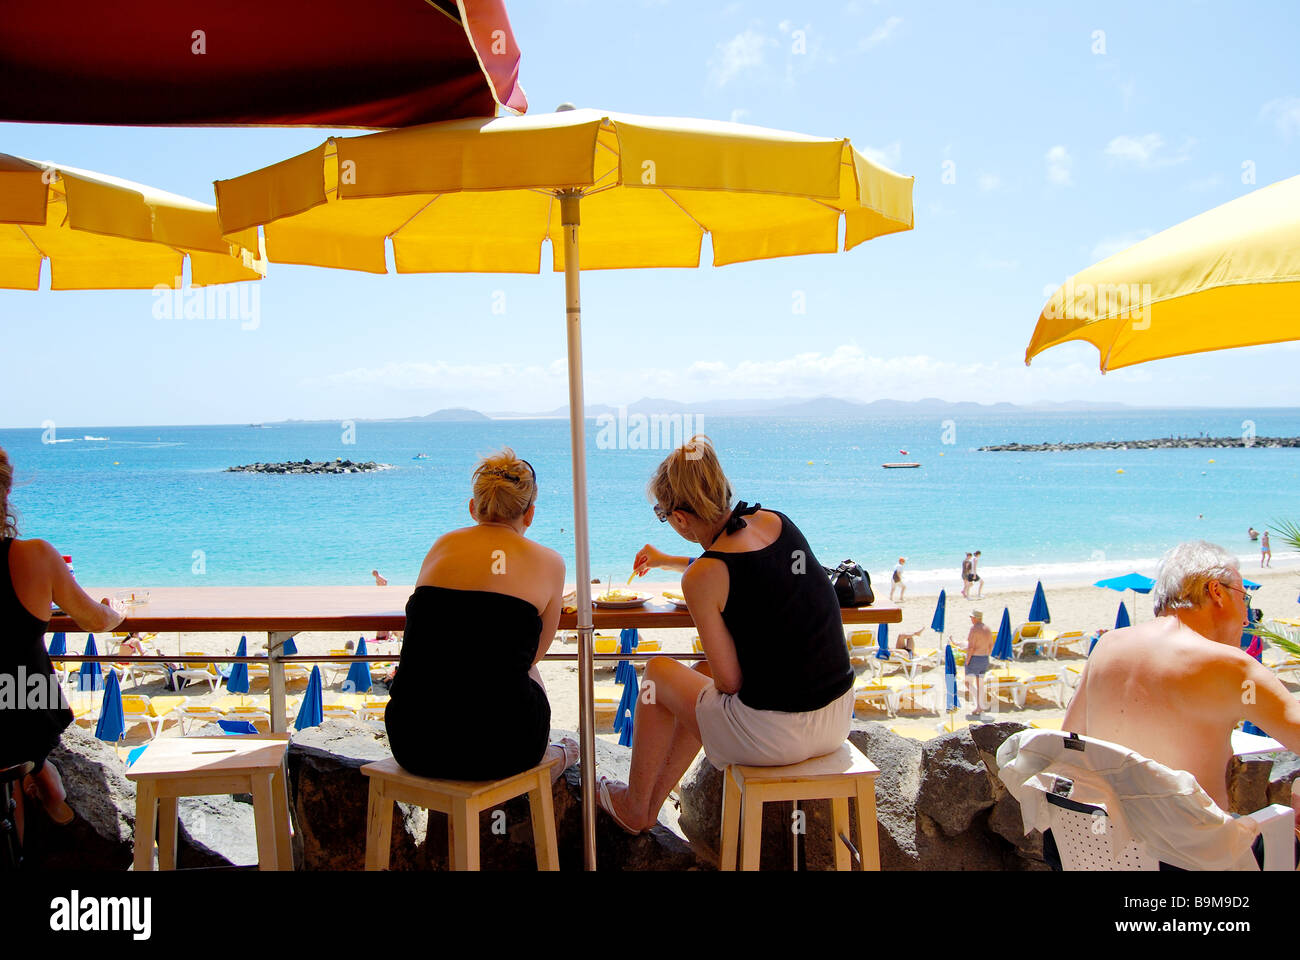 Beach promenade cafe, Playa Grande, Playa Blanca, Lanzarote, Canary Islands, Spain Stock Photo